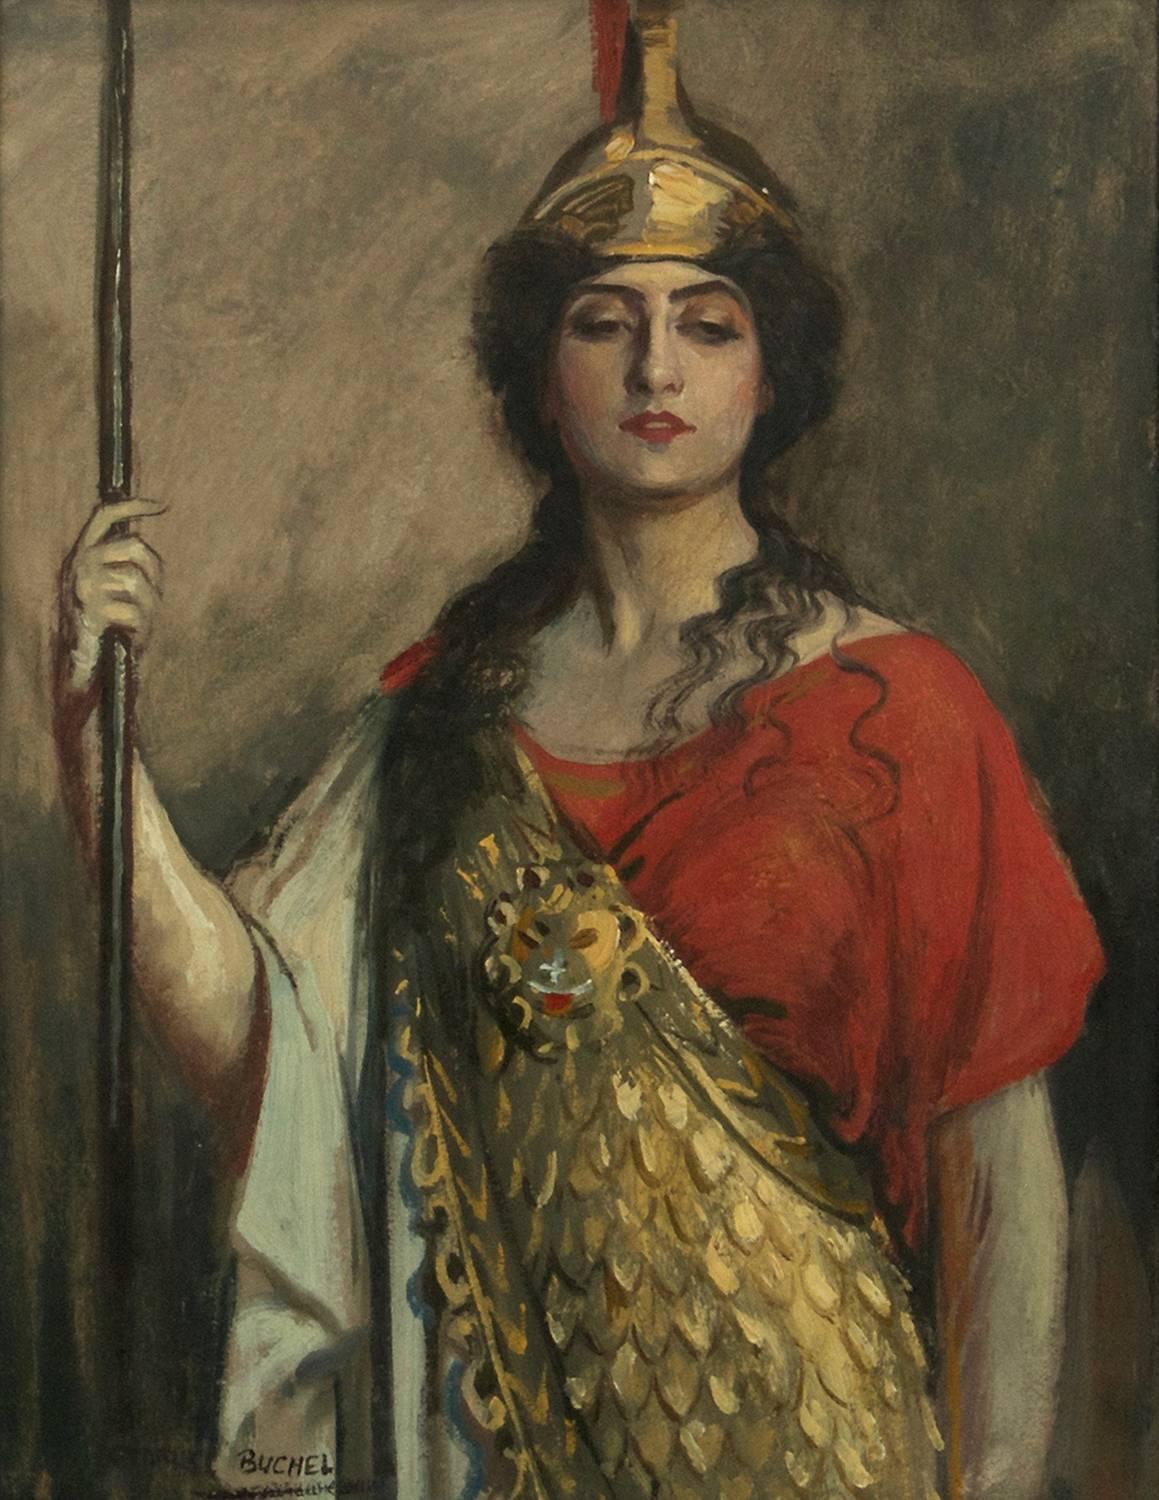 Charles Buchel Portrait Painting - Constance Collier as Pallas Athene